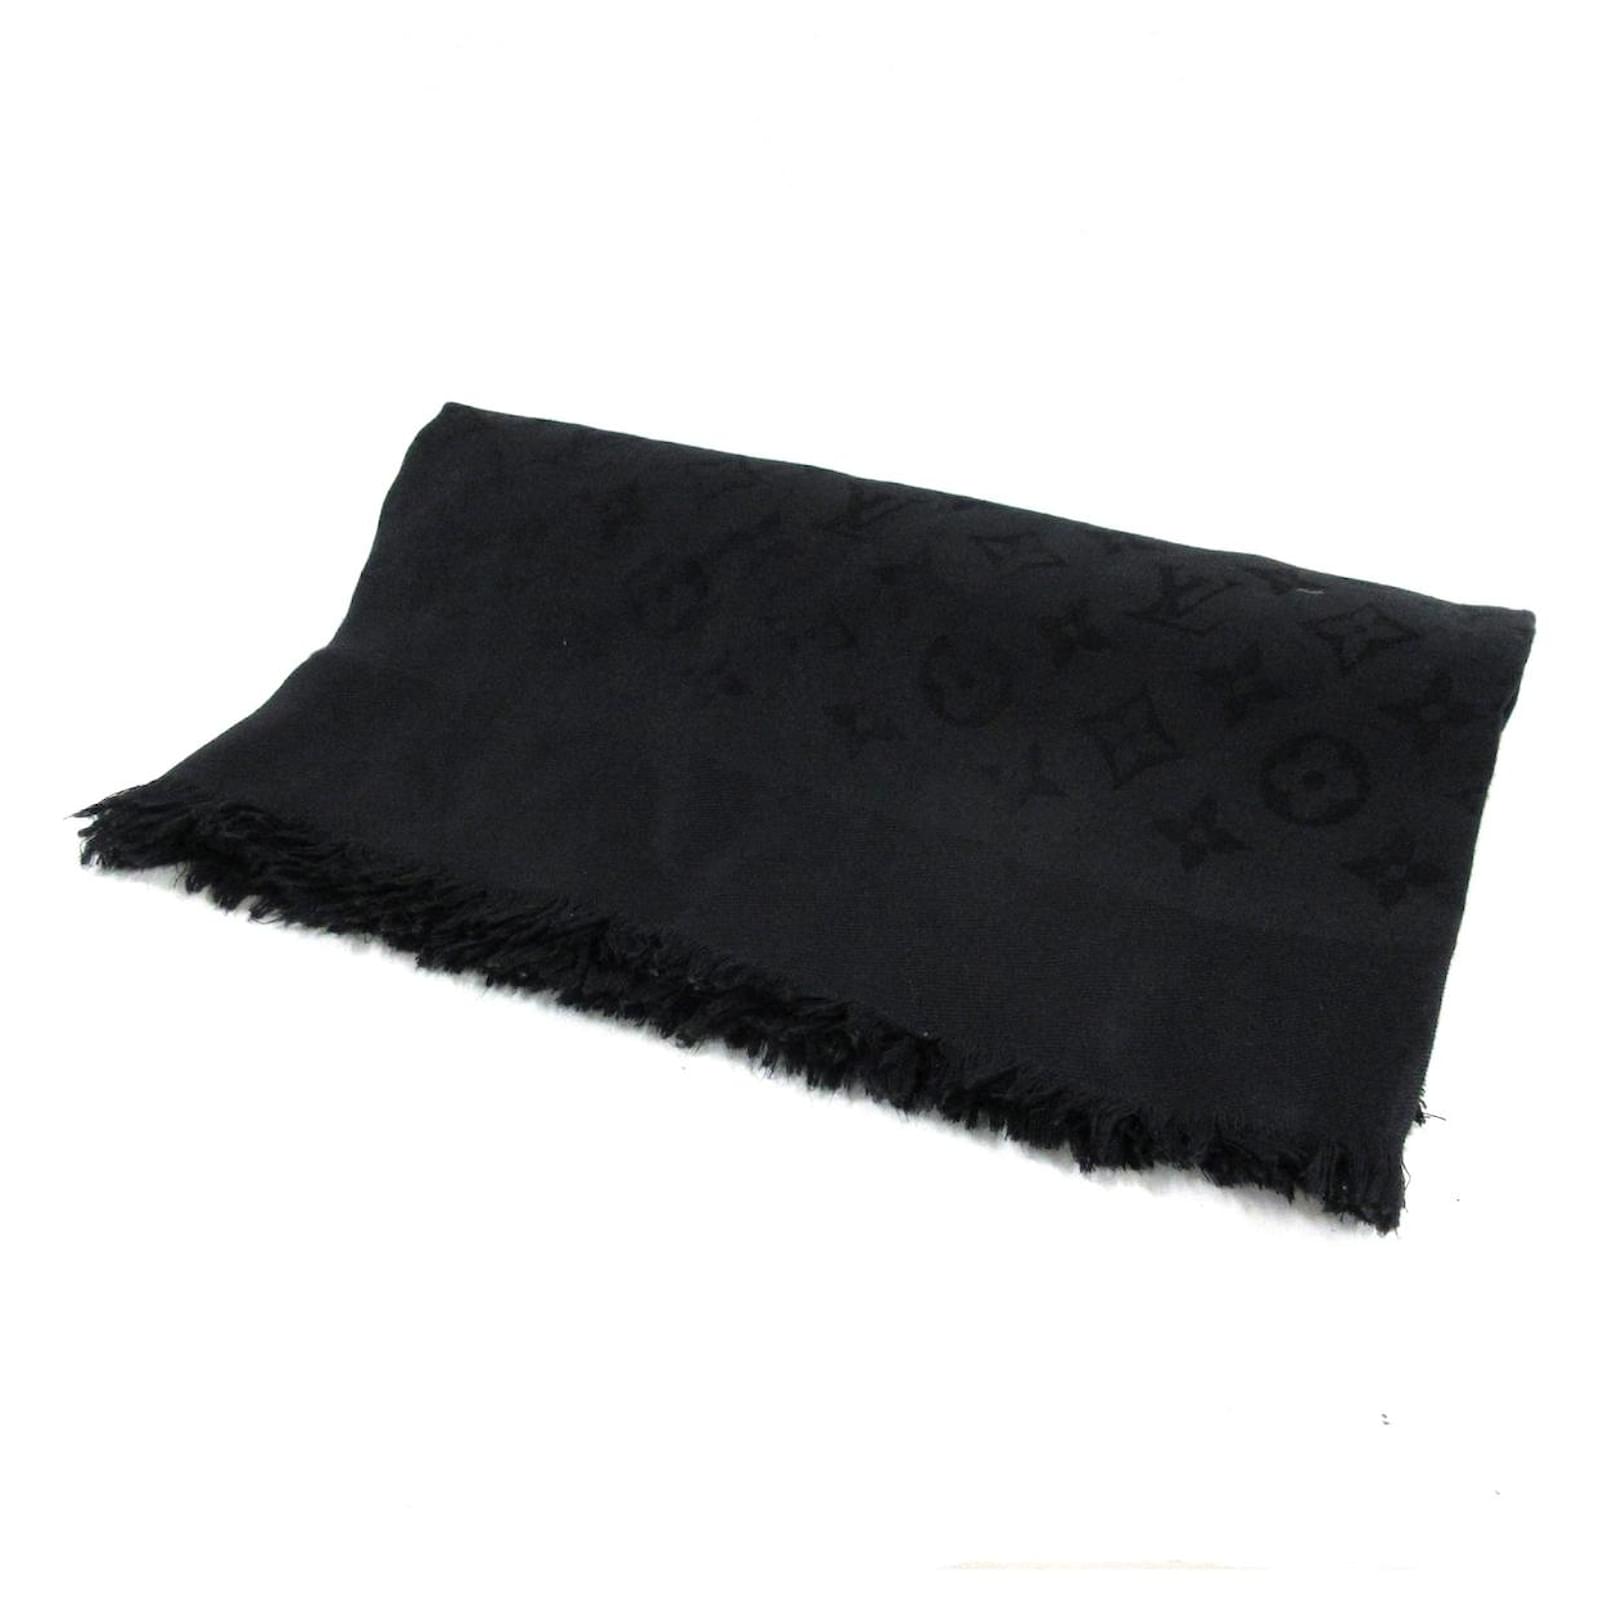 silk louis vuitton scarf black